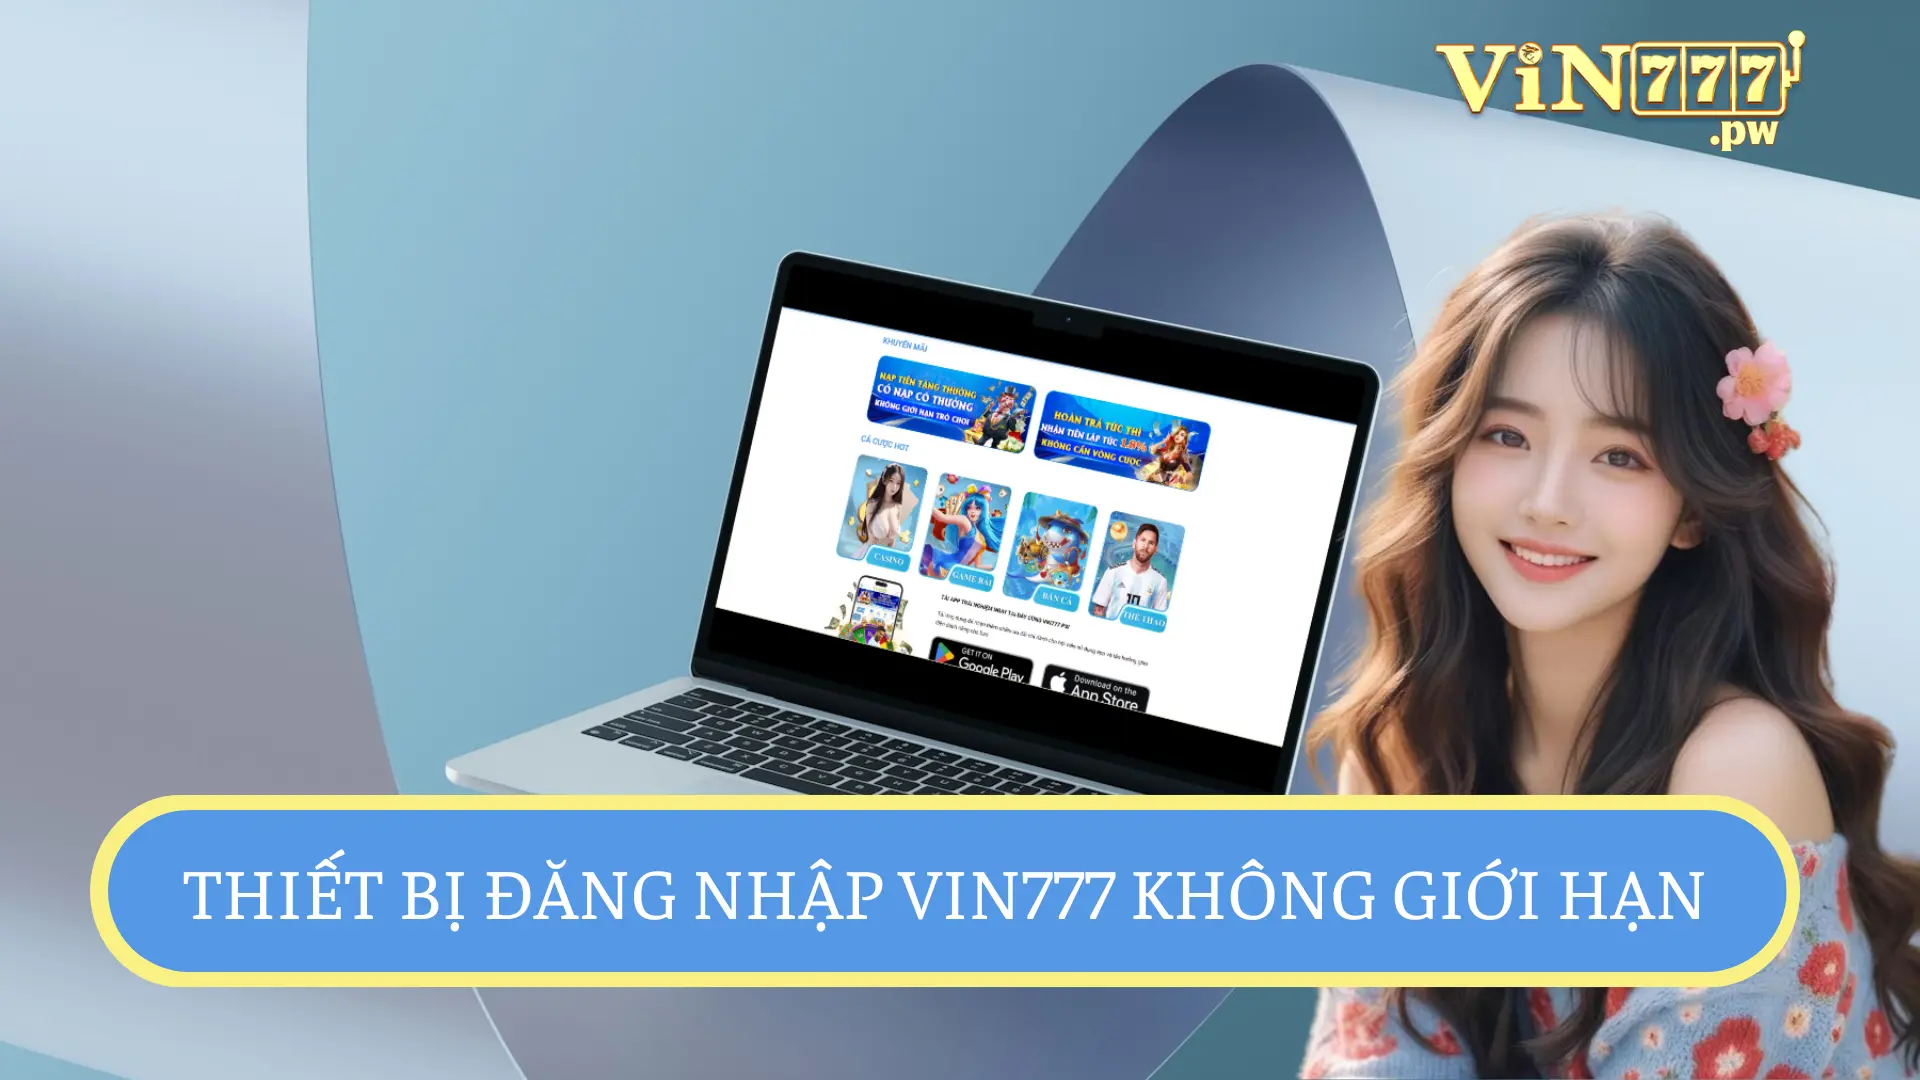 nguoi-choi-co-the-dang-nhap-vin777-bang-nhung-thiet-bi-nao